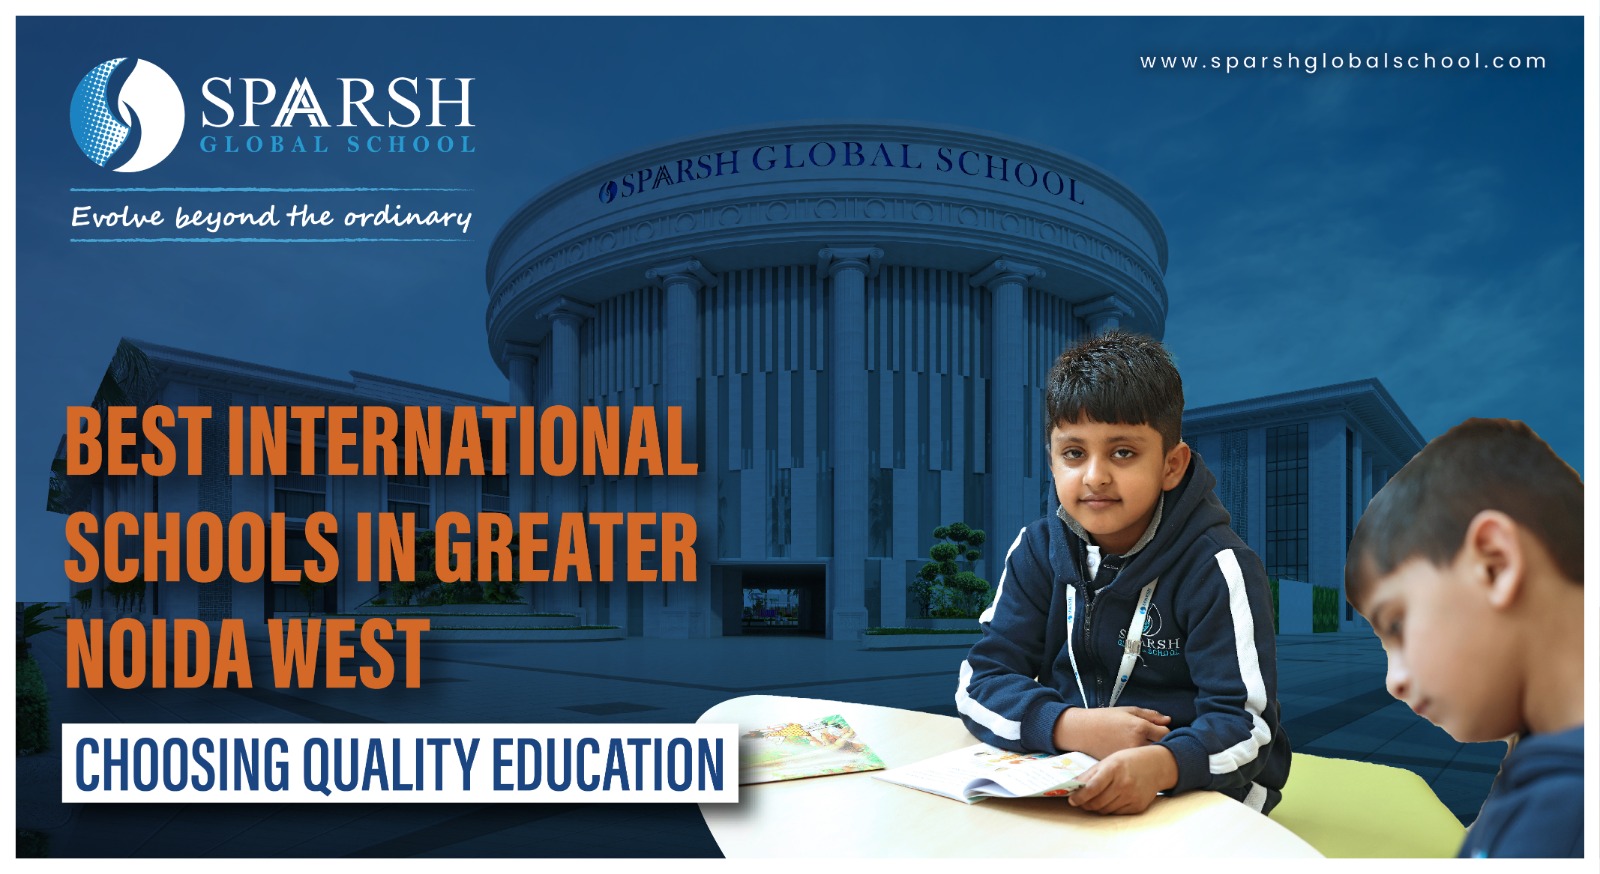 Best International Schools in Greater Noida West - Choosing Quality Education